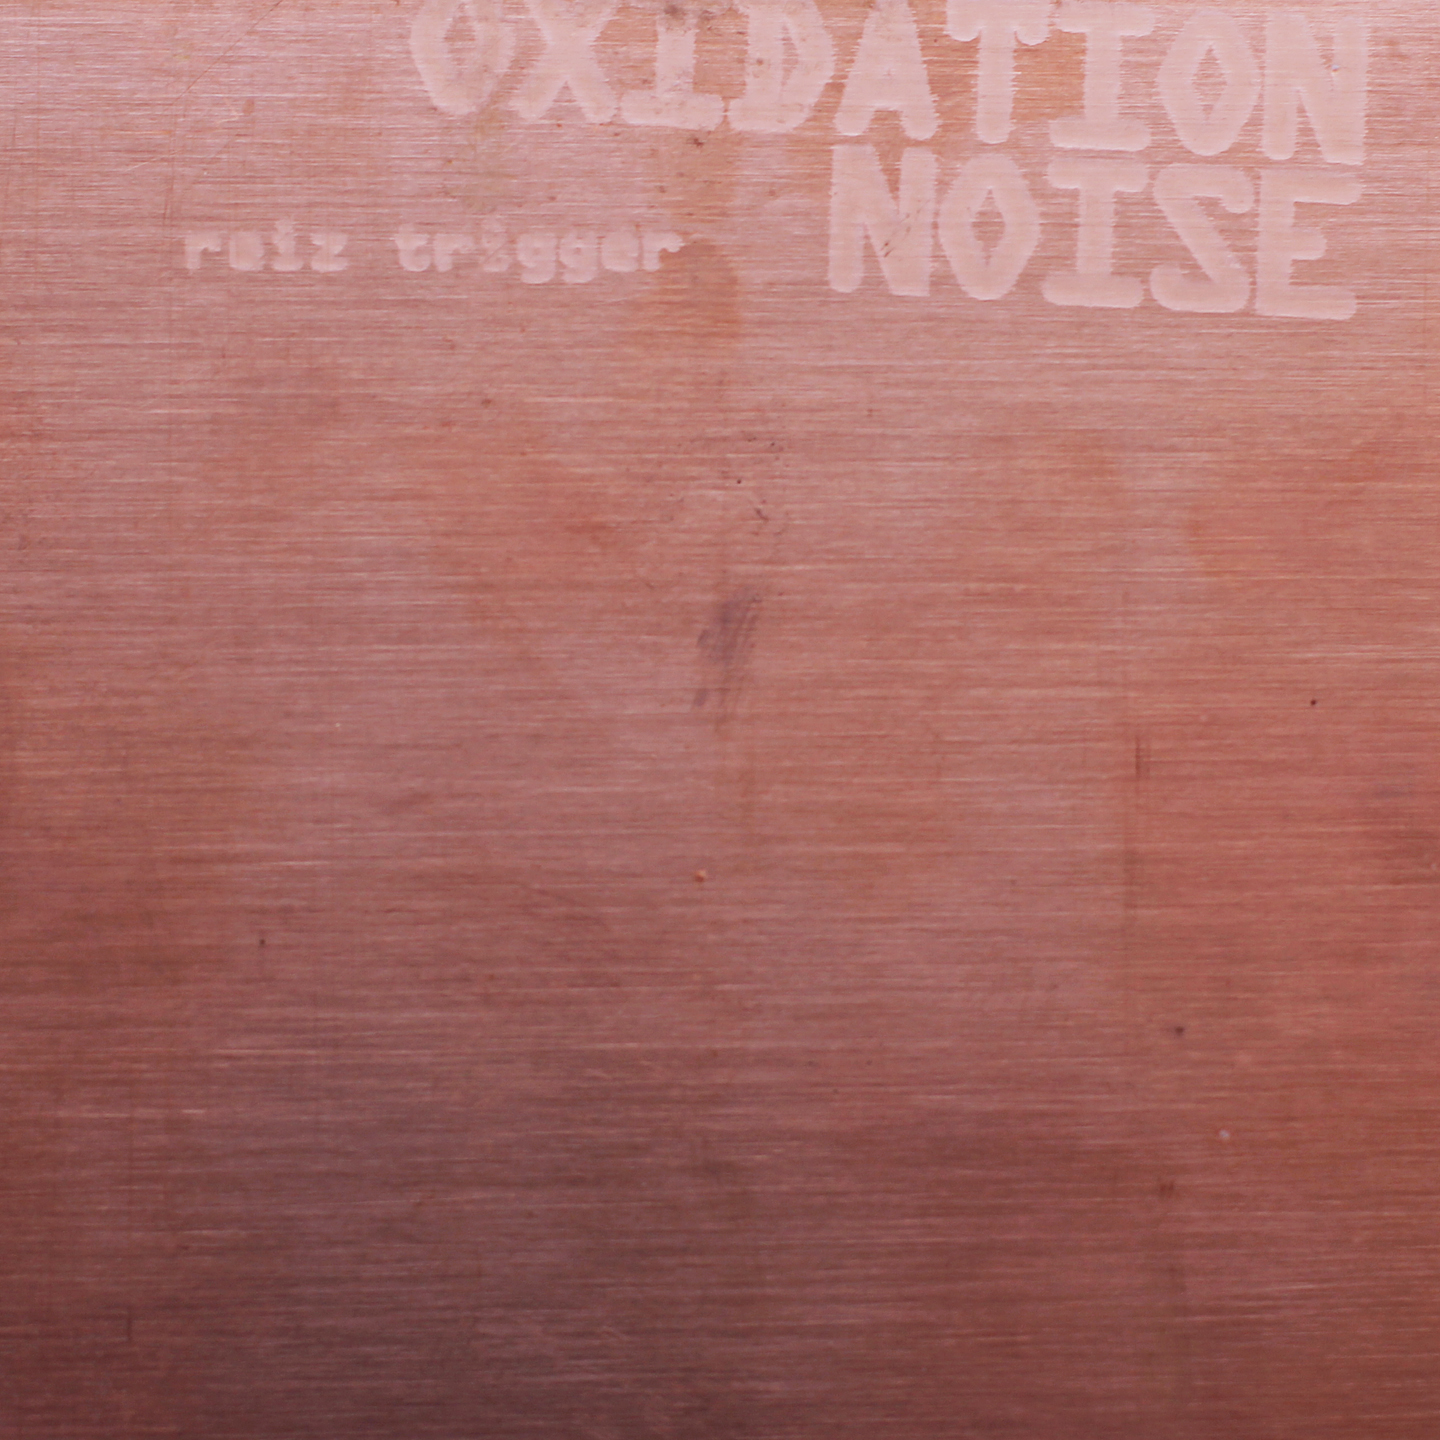 CD Reiz Trigger: "Oxidation Noise" (Standard Edition)